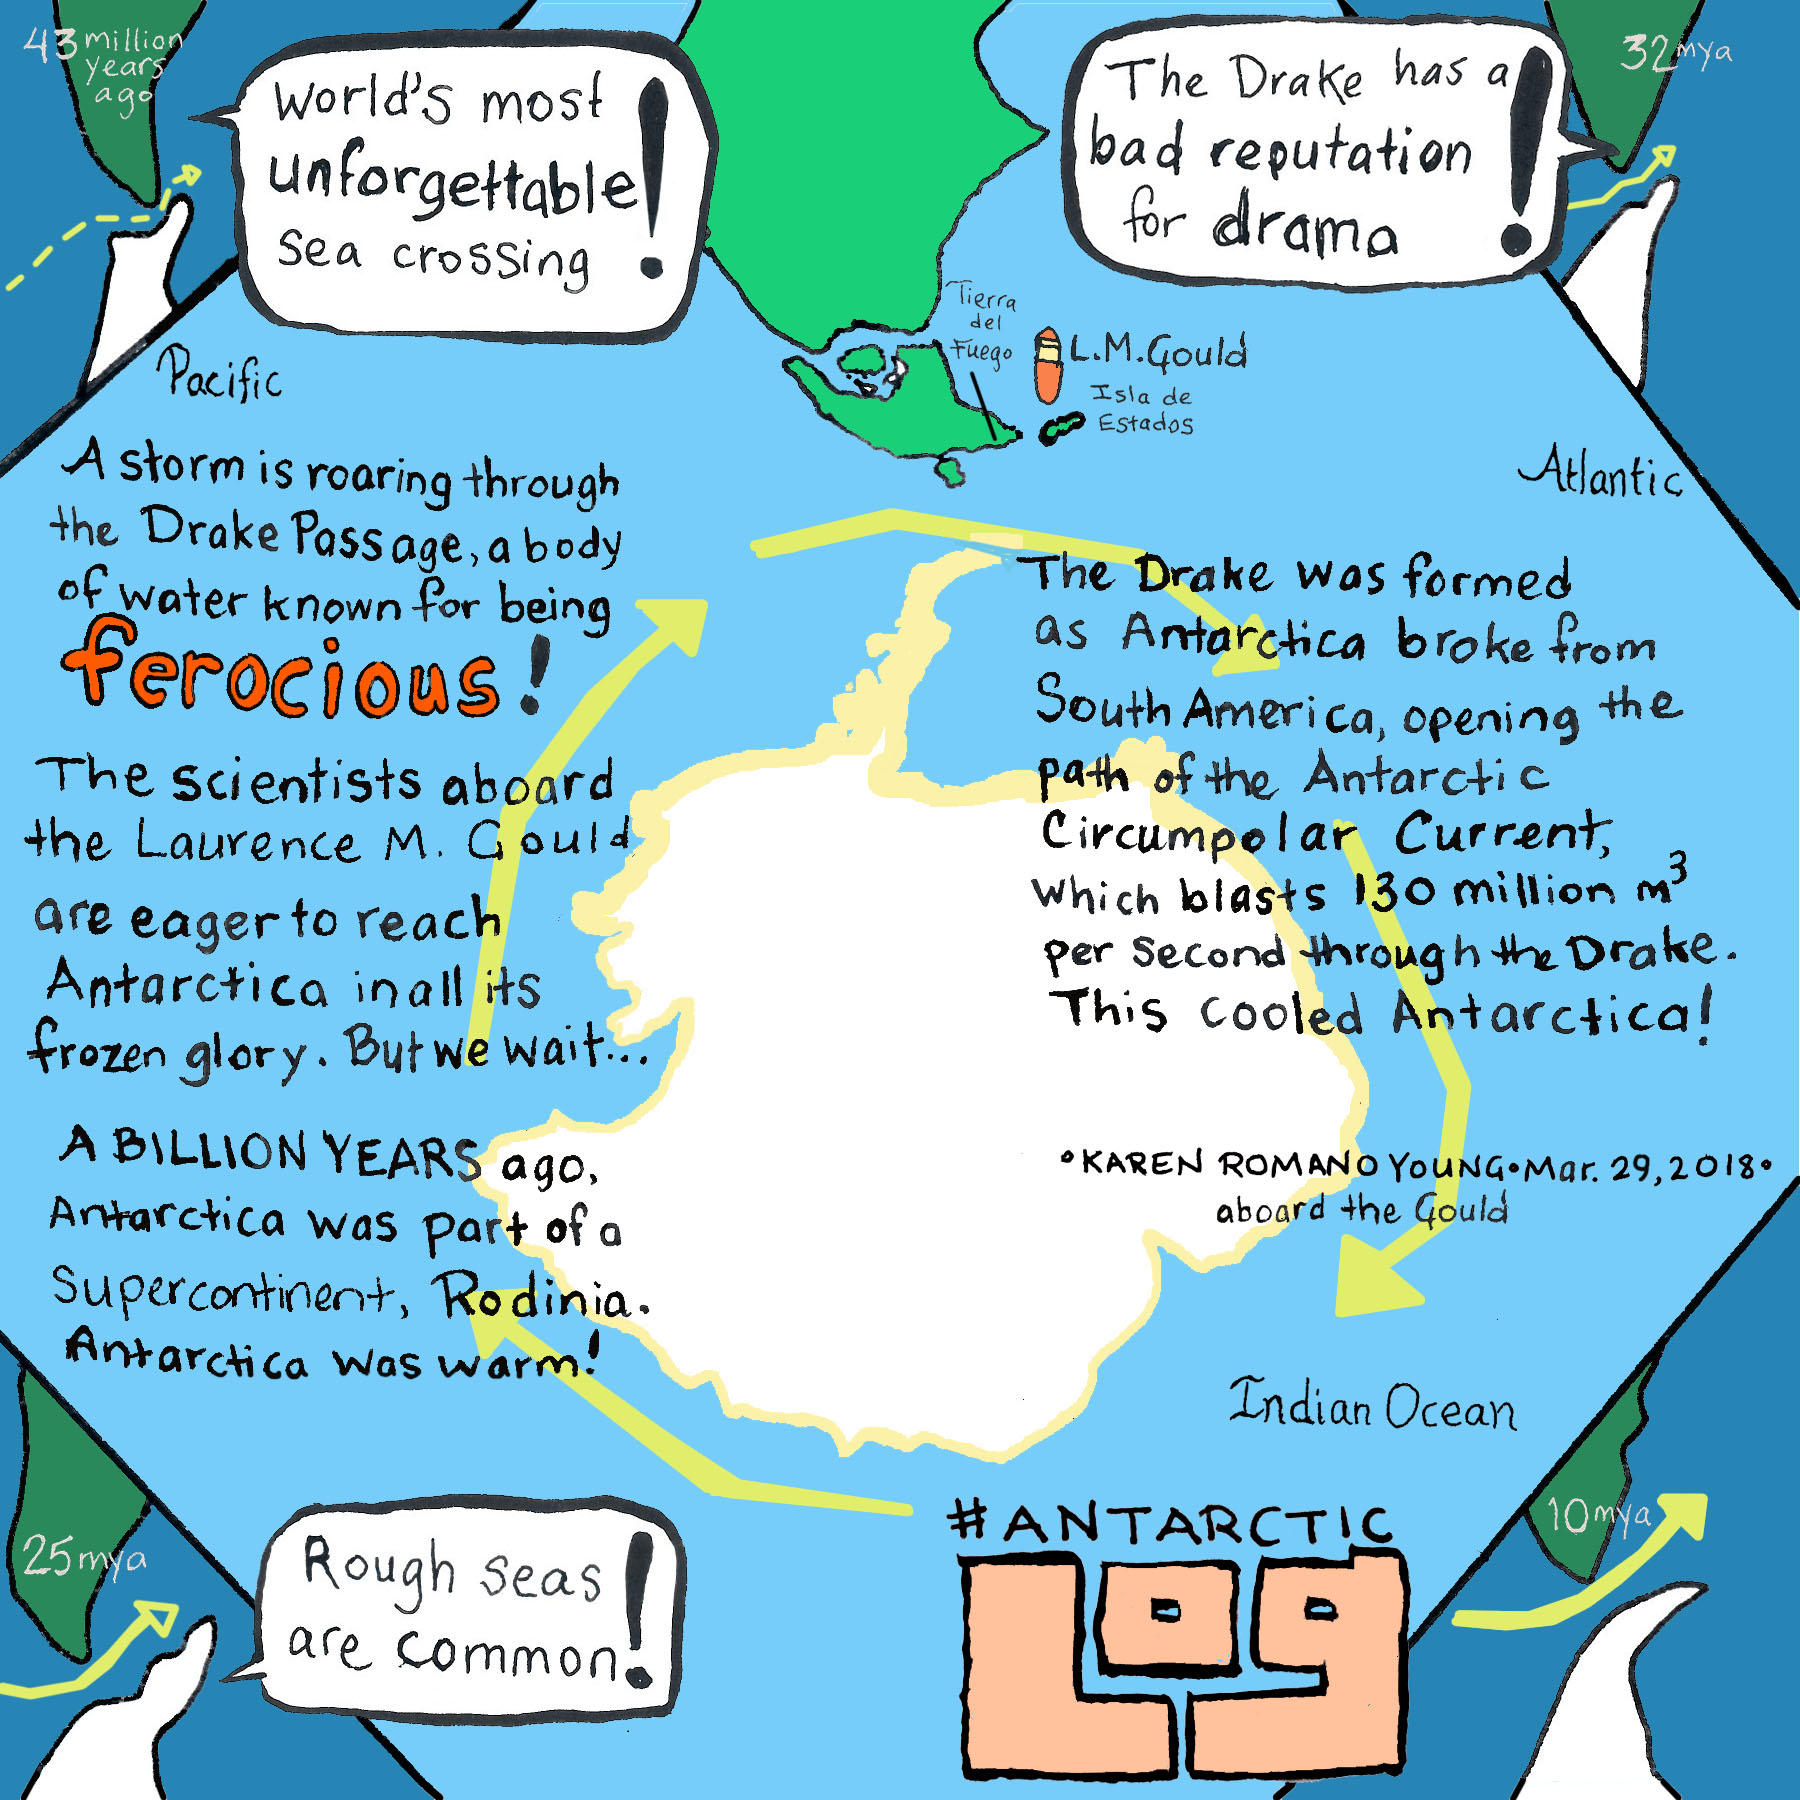 #AntarcticLog: Crossing the Drake Passsage